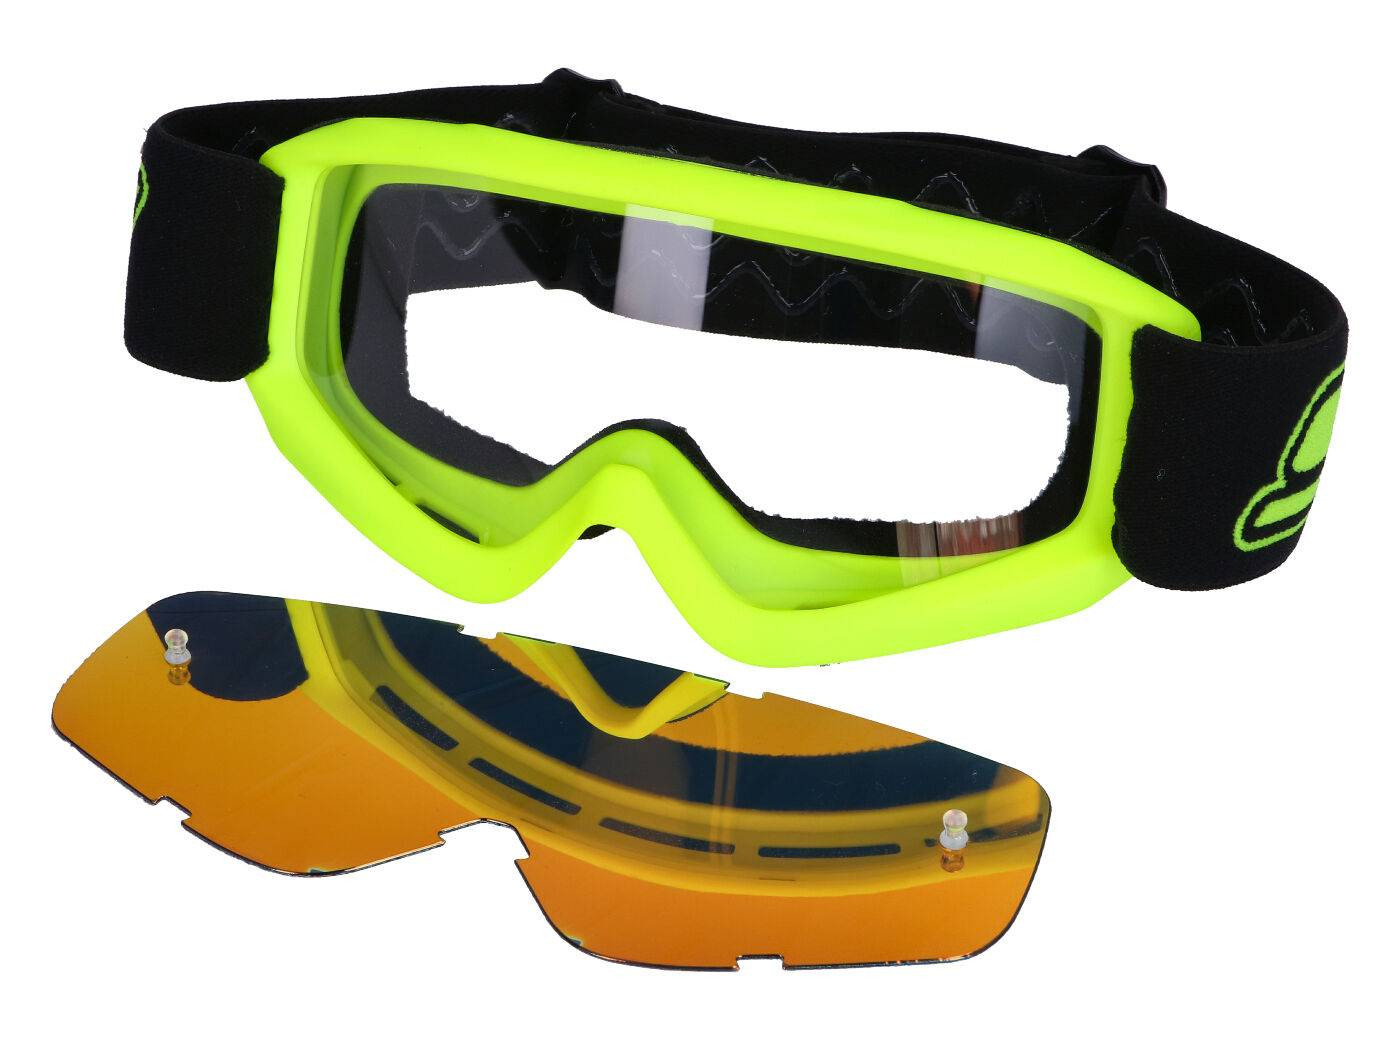 MX Goggles S-Line Kids Fluo Sárga - Iridium Piros